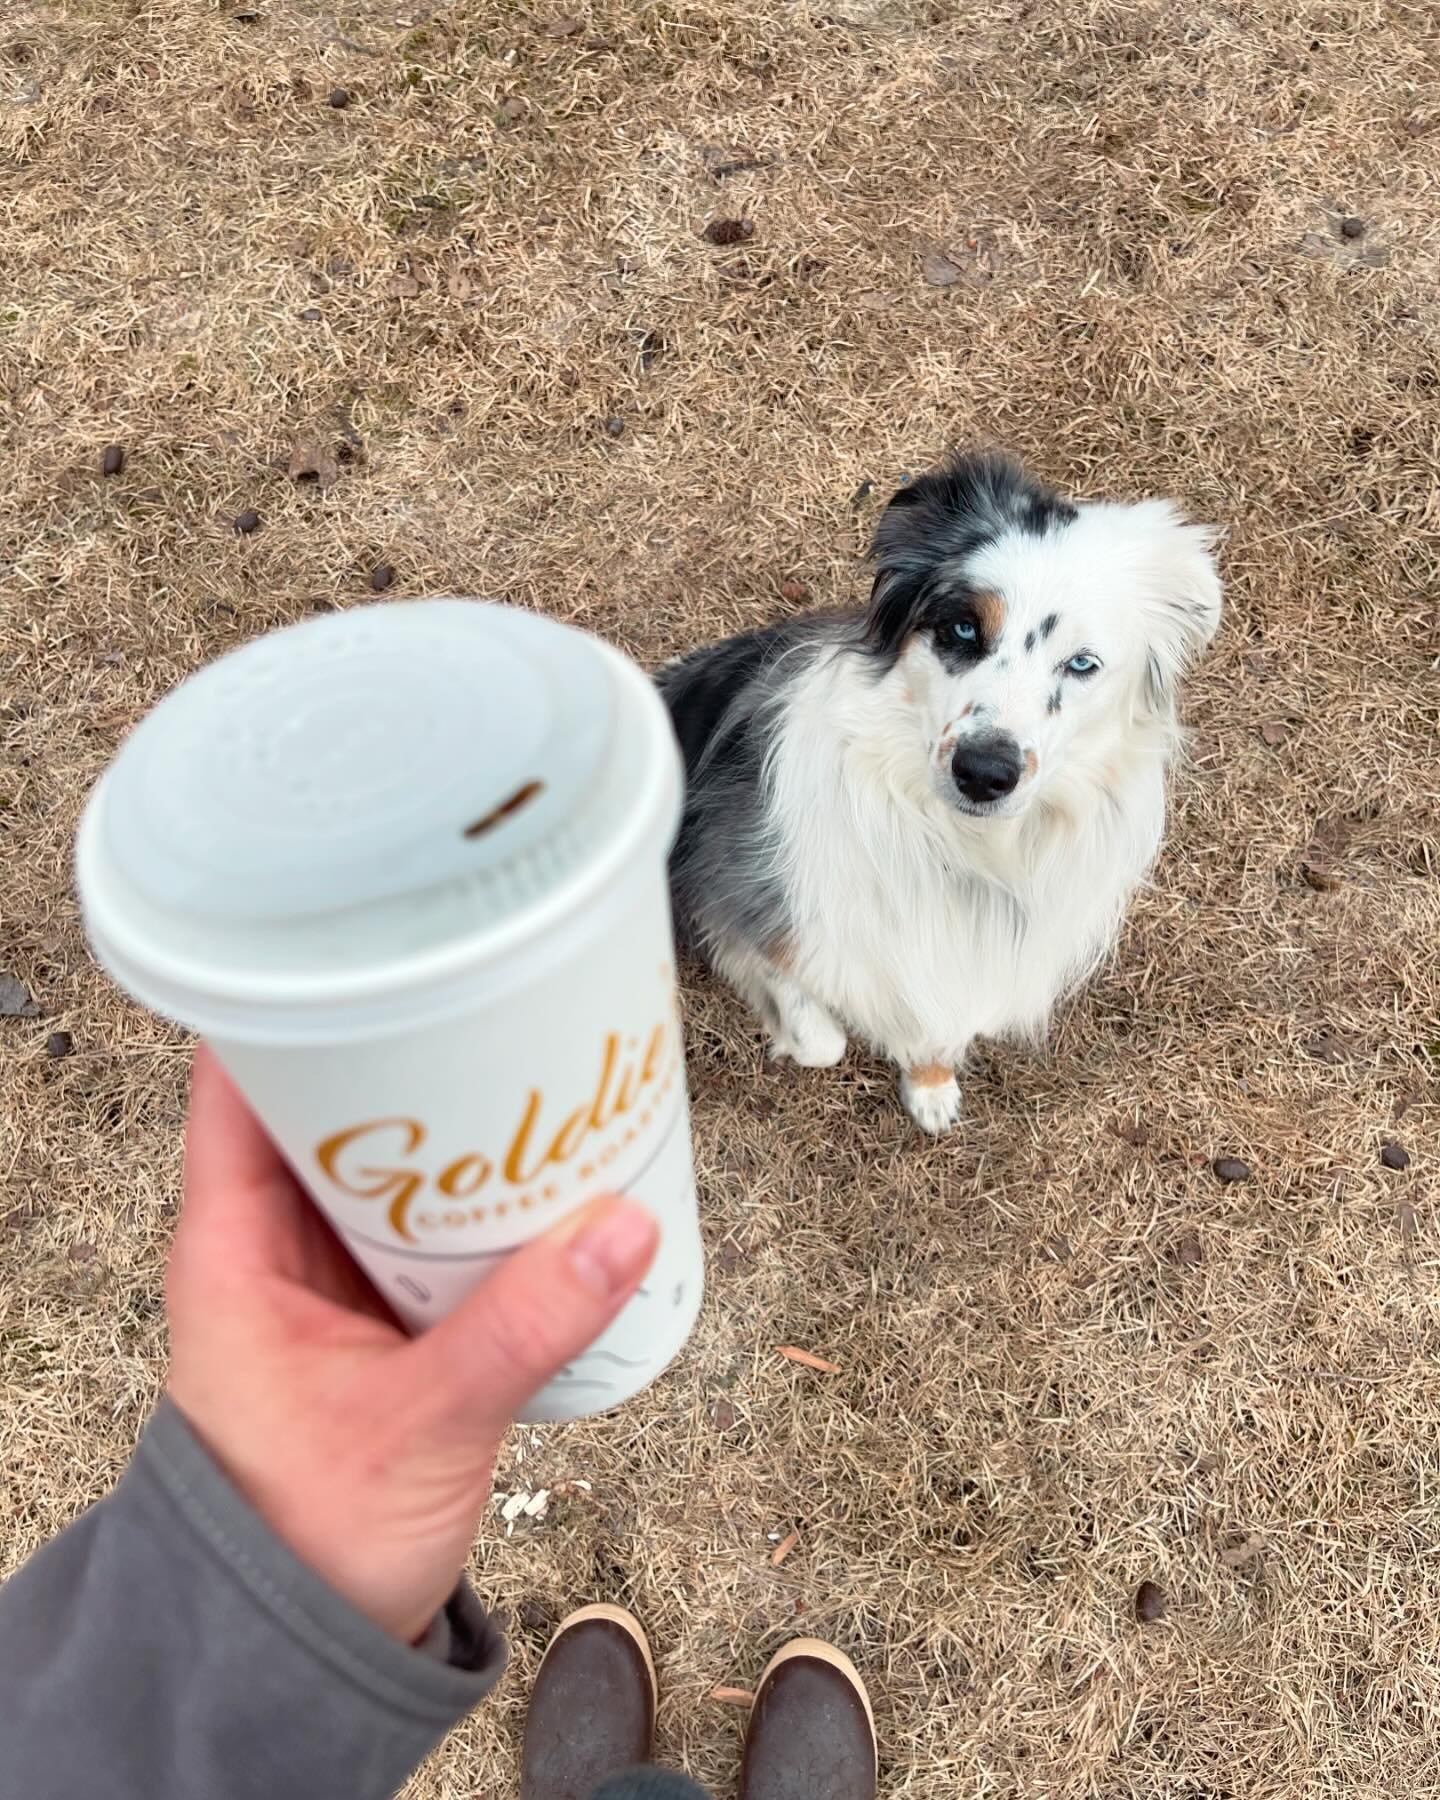 Happy weekend! 🐶😀 It finally feels like spring. Grab a coffee and get outside! #goldiescoffeeroasters #alaska #womenwhoroast #specialtycoffee #dogwalking #fuel